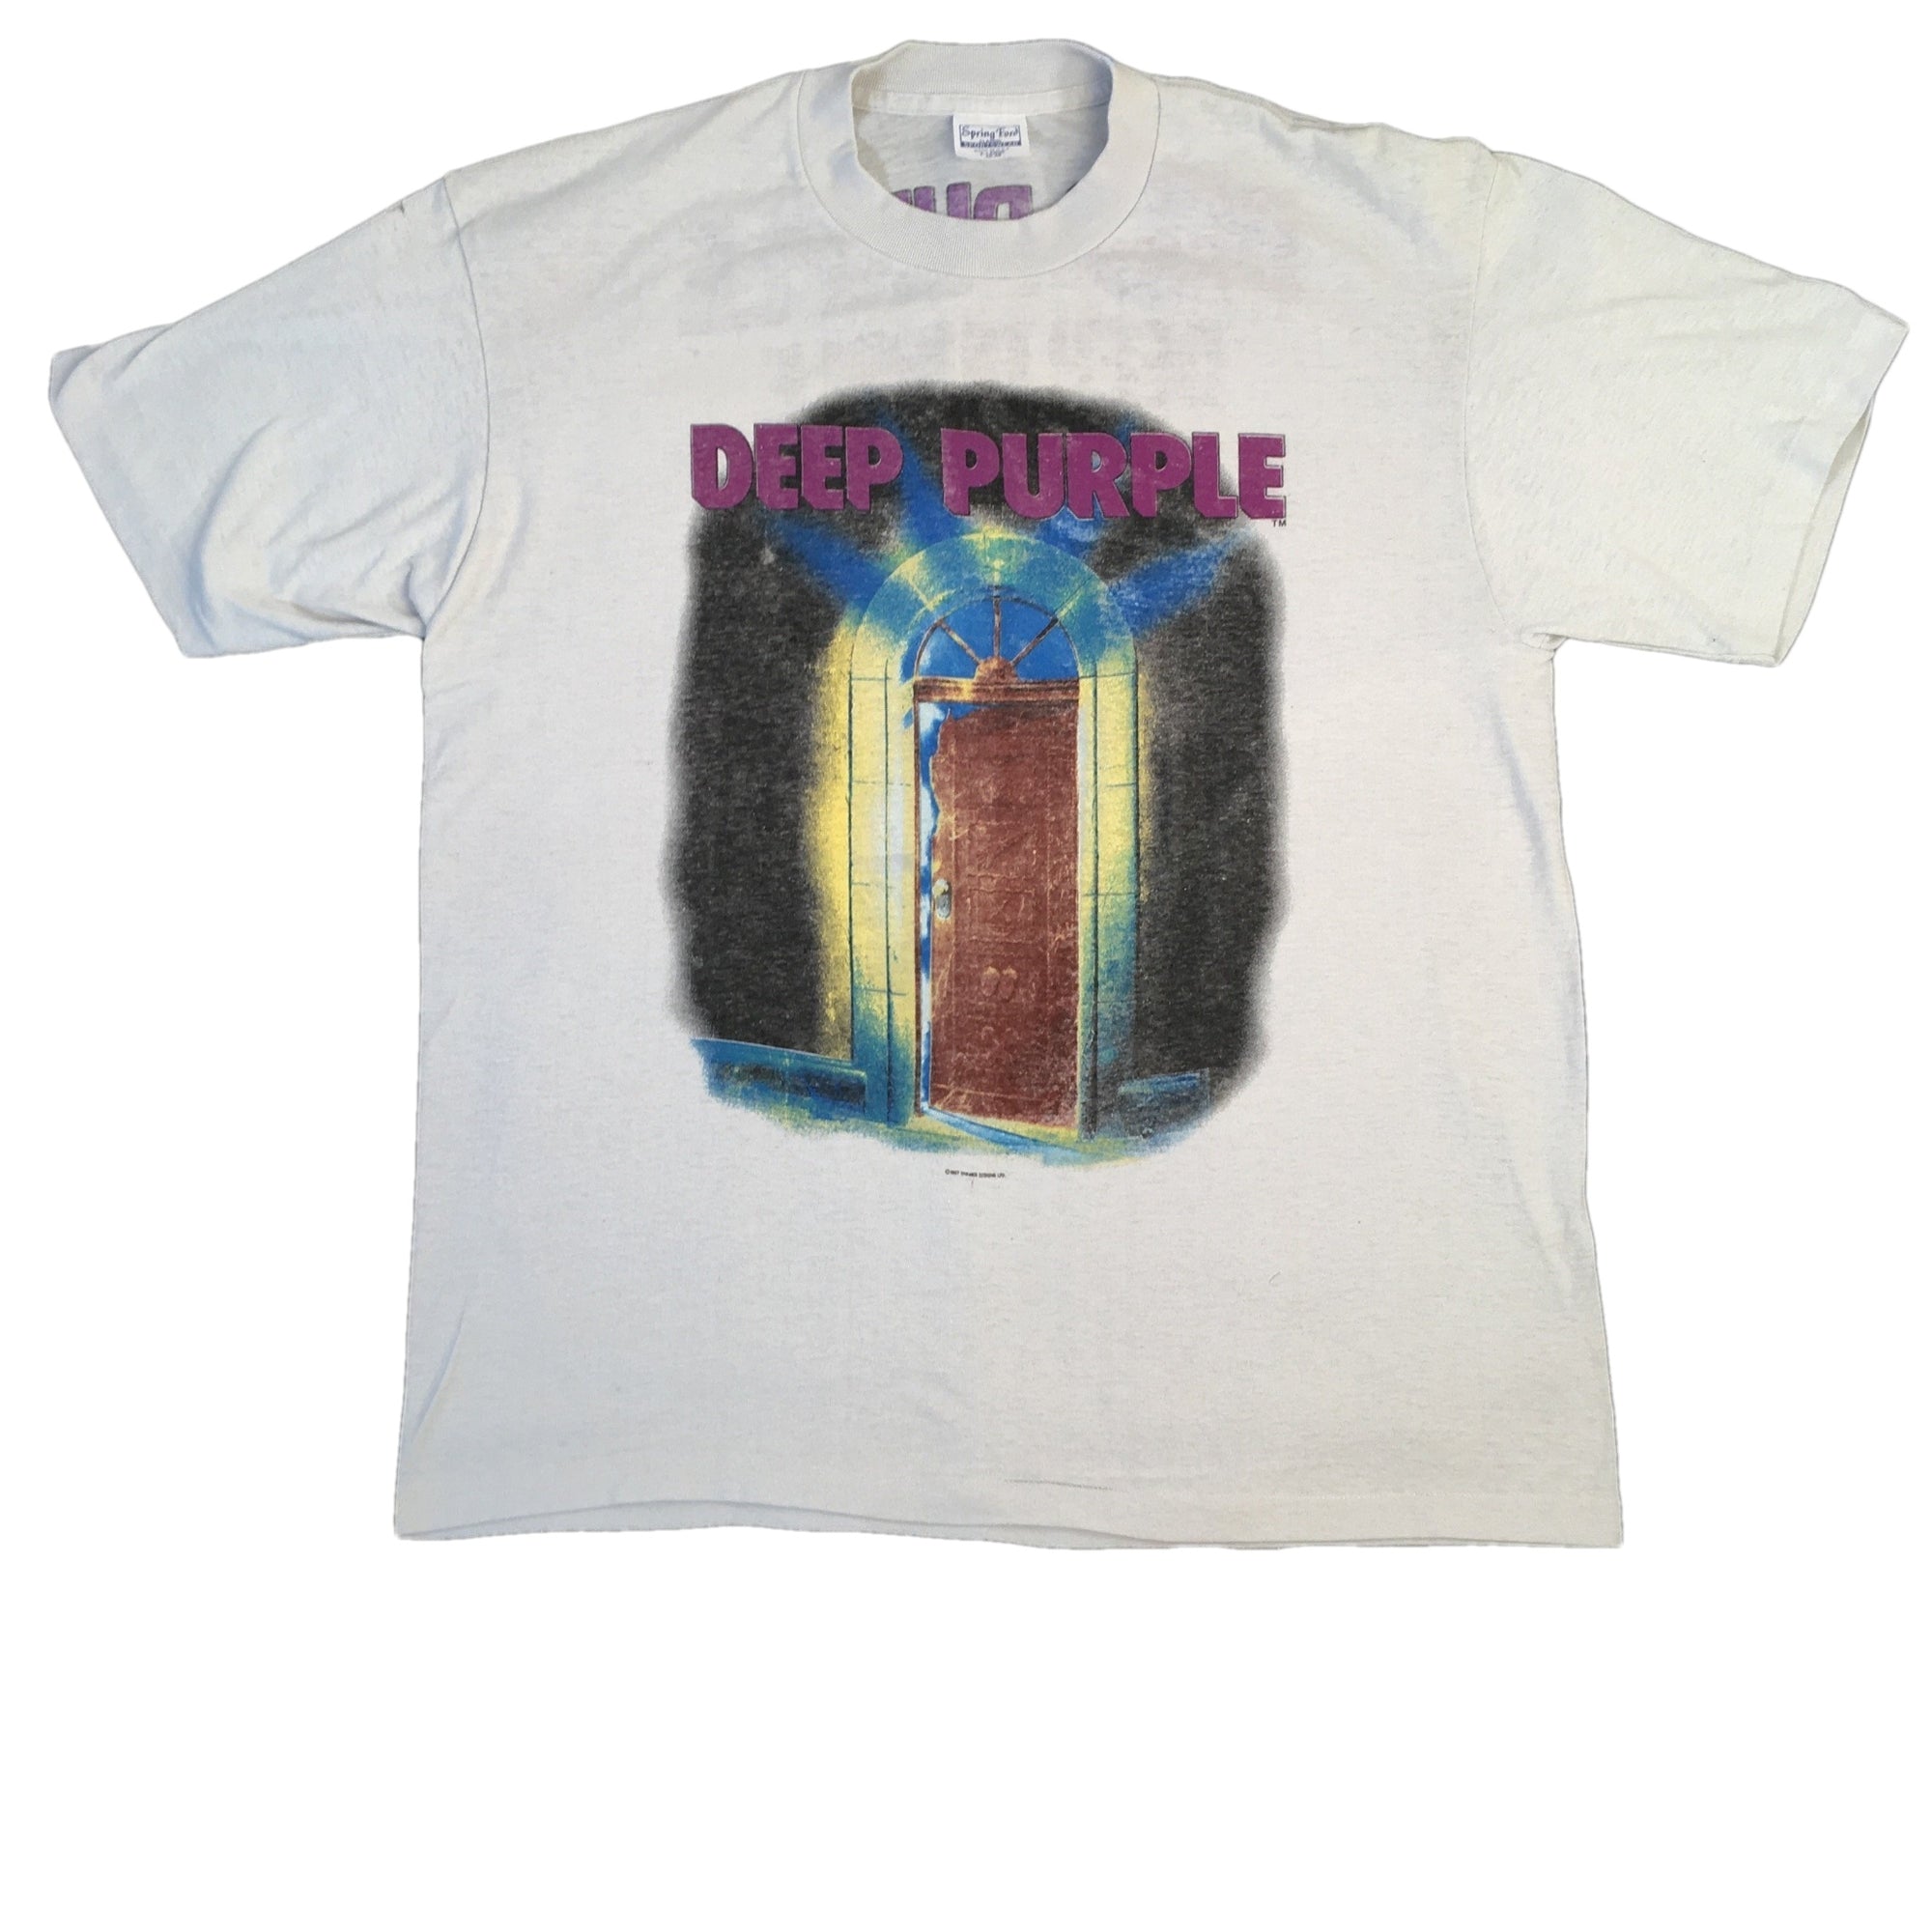 Vintage Deep Purple "House Of Blue Light" T-Shirt - jointcustodydc